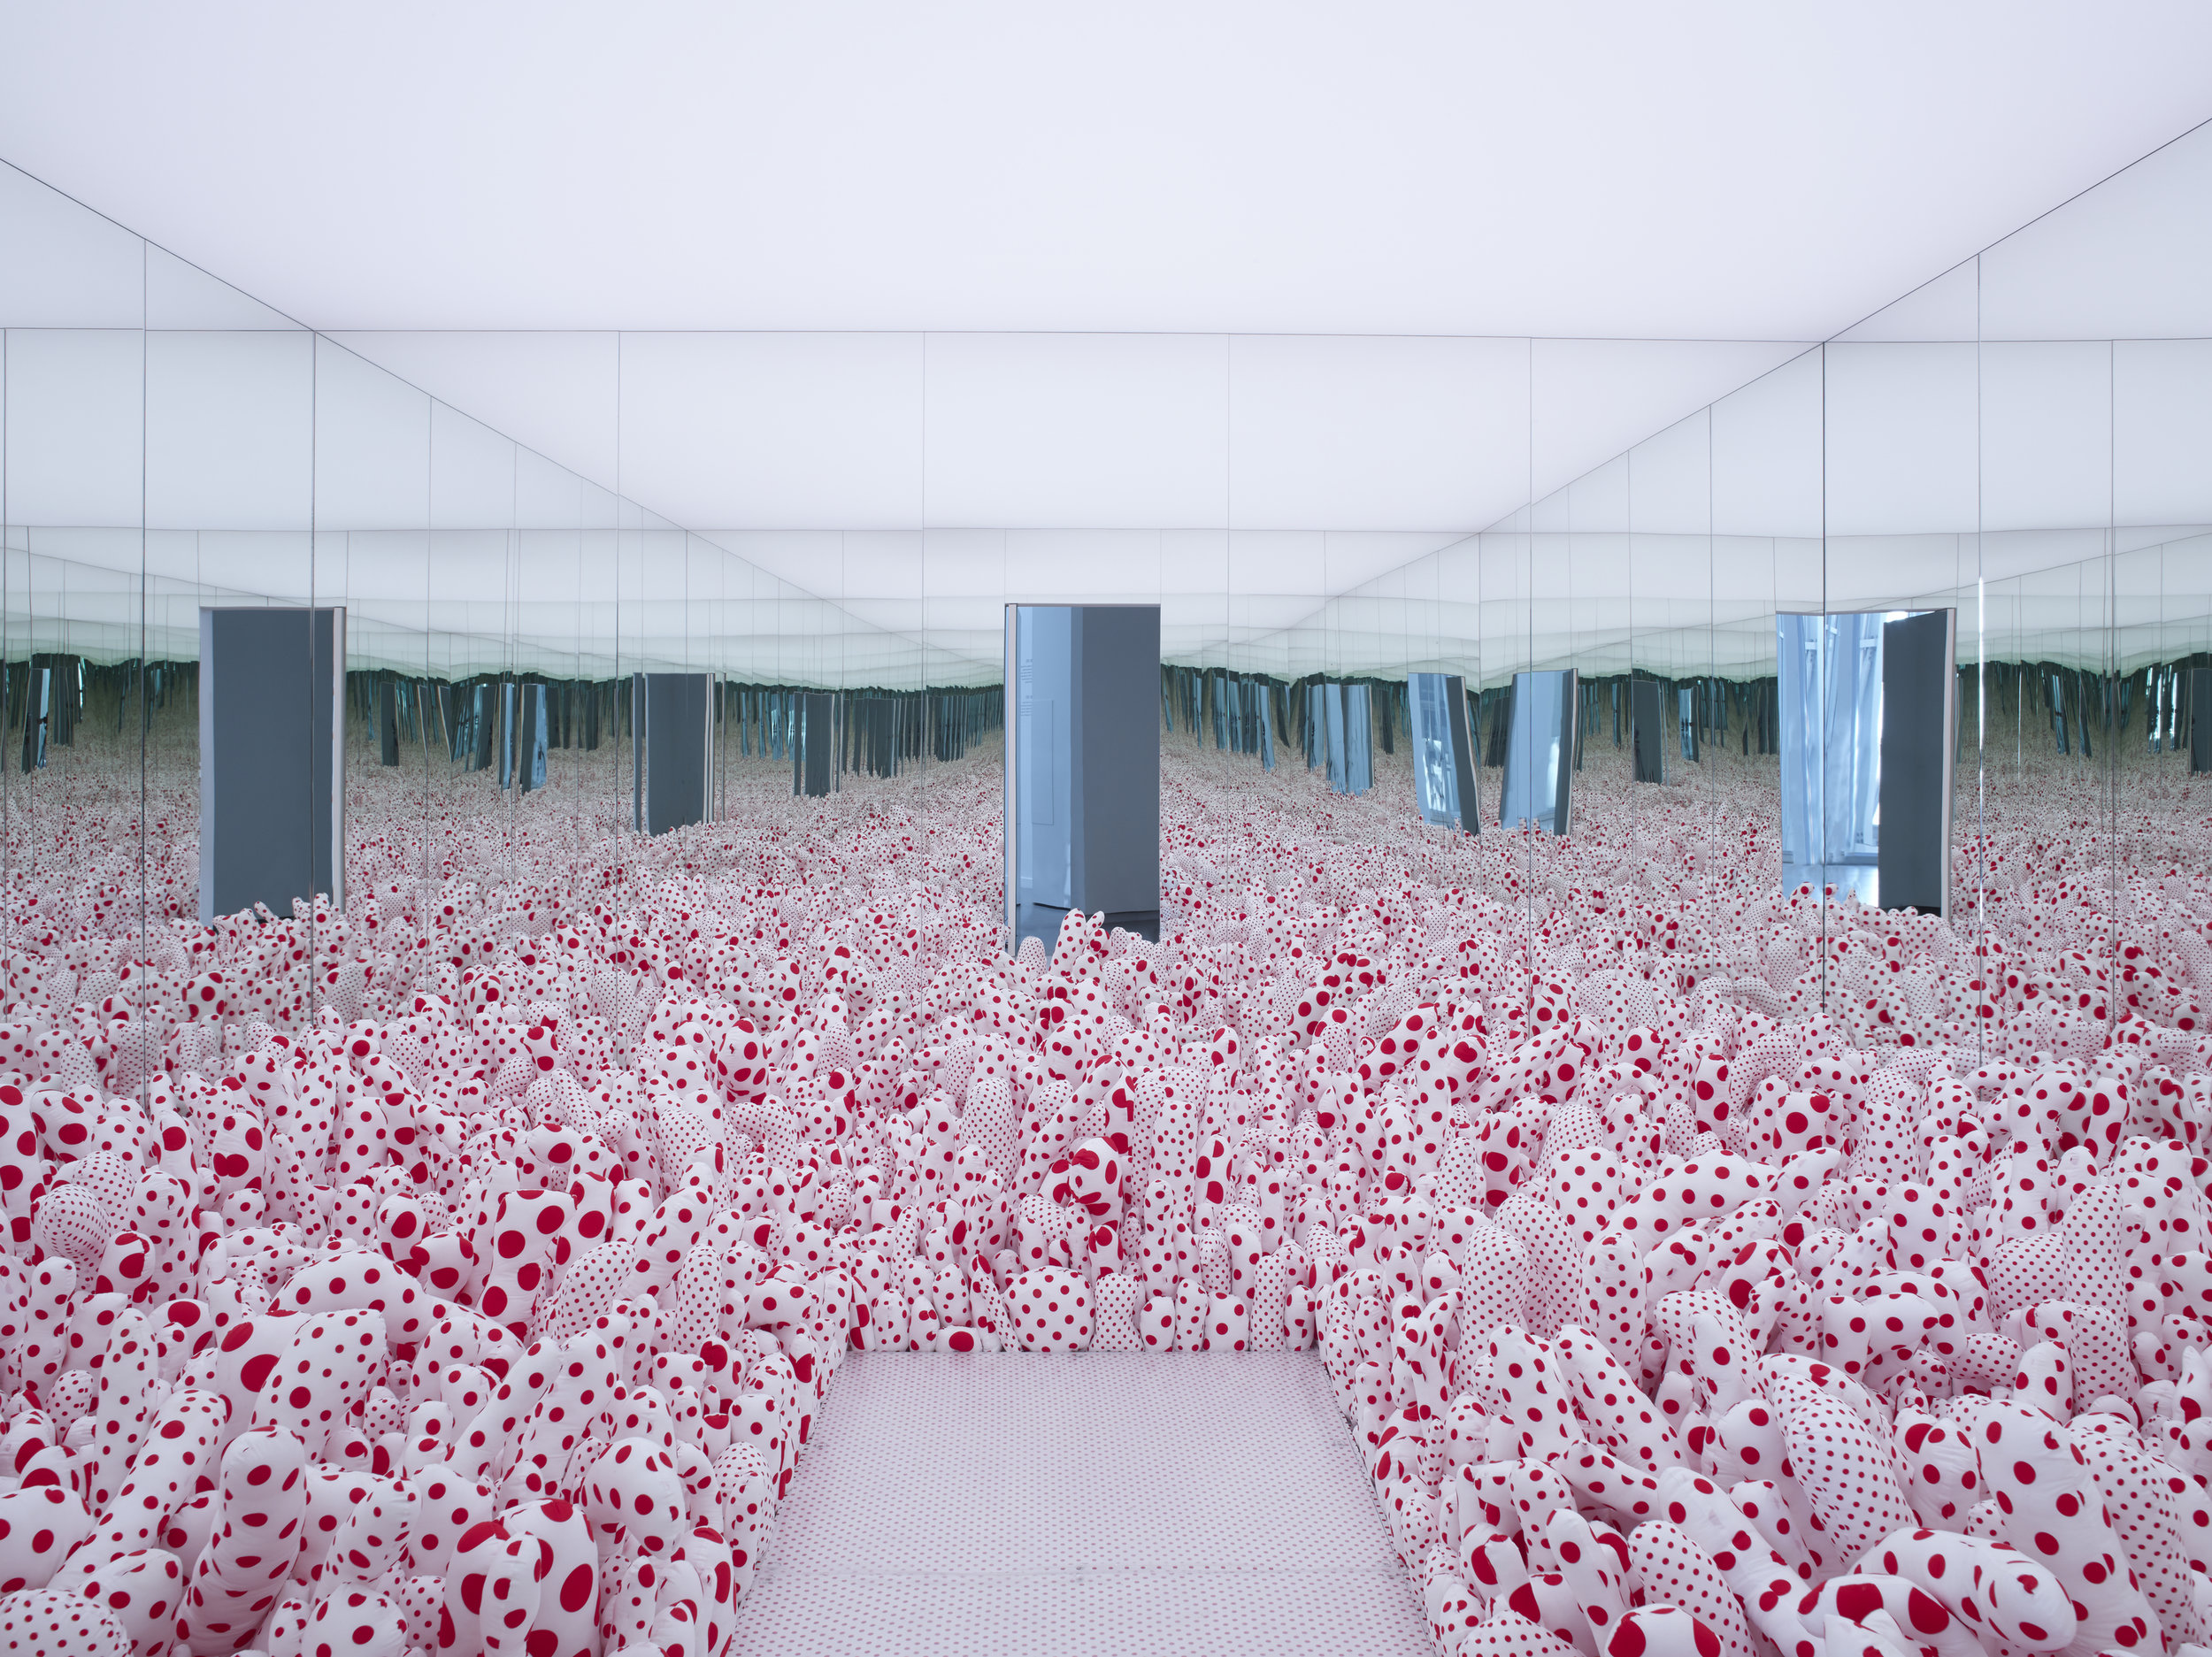   Yayoi Kusama :  Infinity Mirror Room  -  Phalli’s Field (or Floor Show) , 1965/2013 